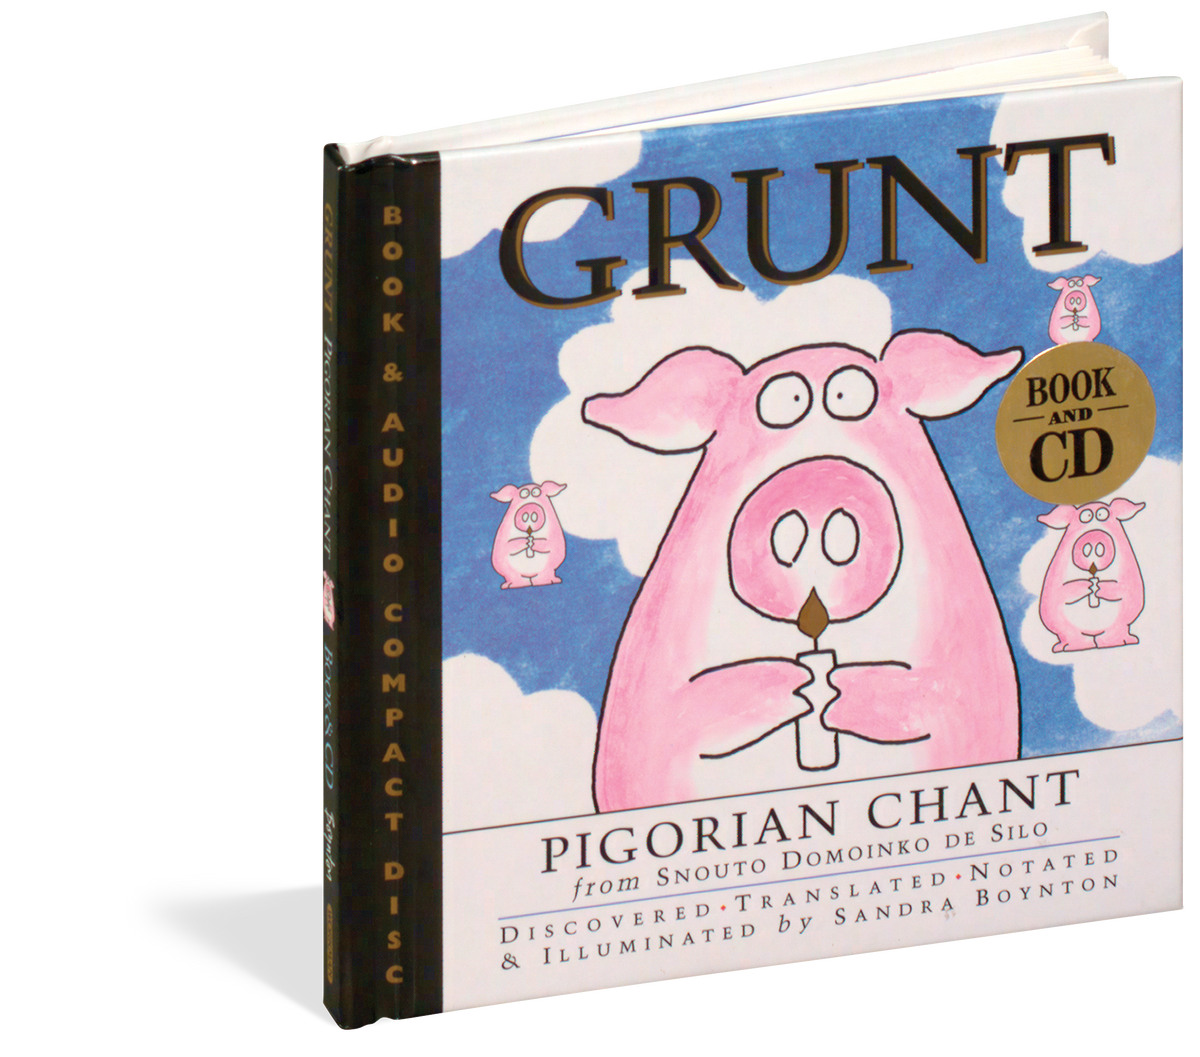 Grunt: Pigorian Chant from Snouto Domoinko de Silo